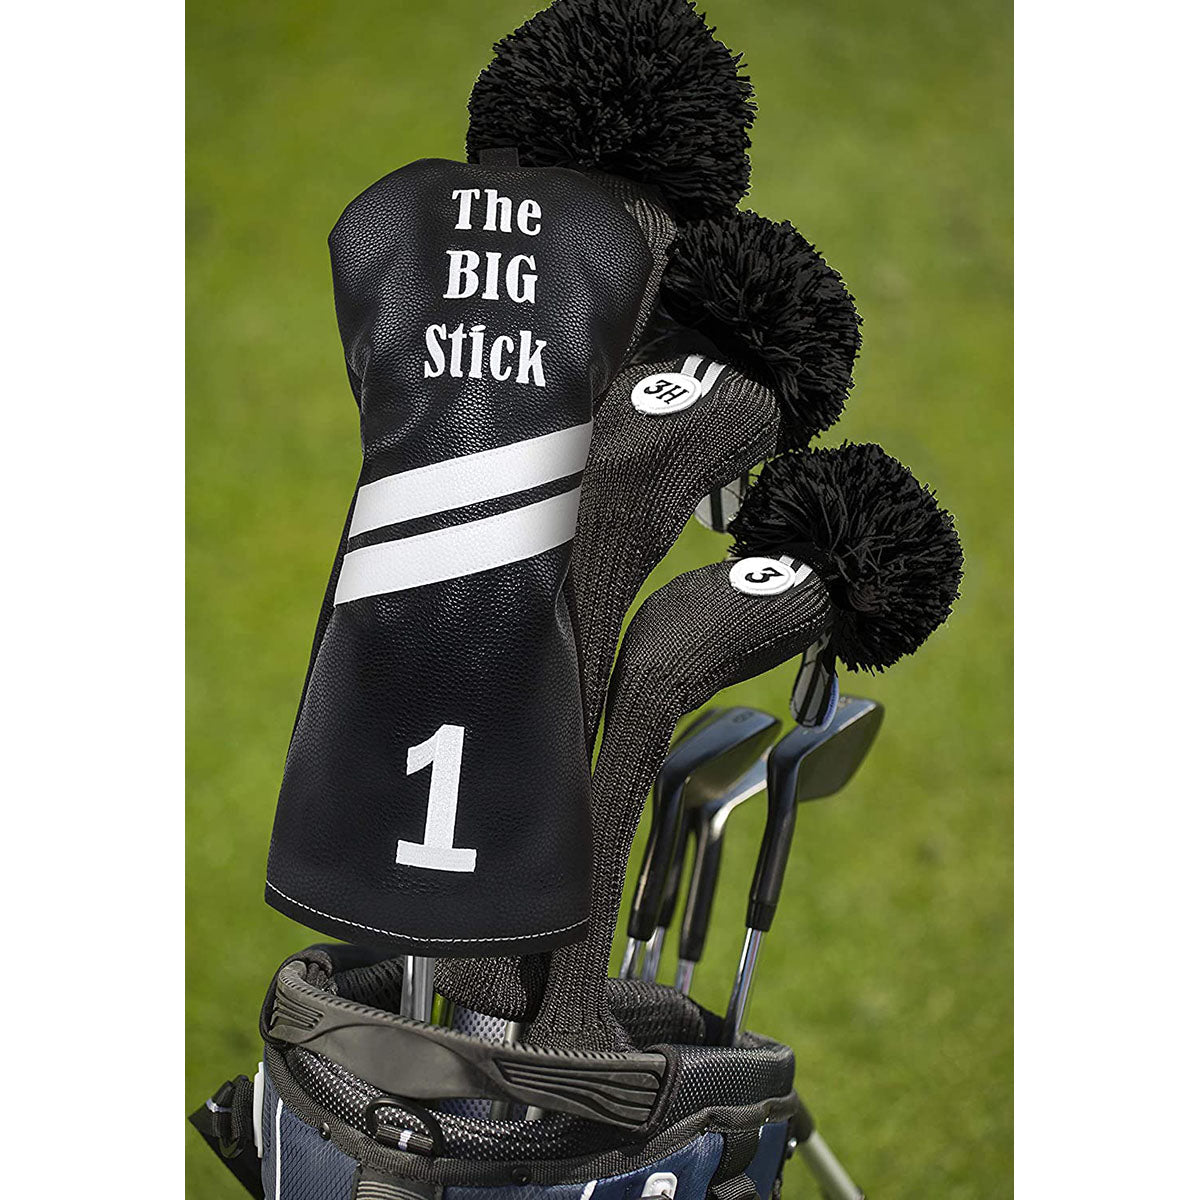 IZZO "The Big Stick" Golf Club Leather Driver Headcover - Black IZZO Golf